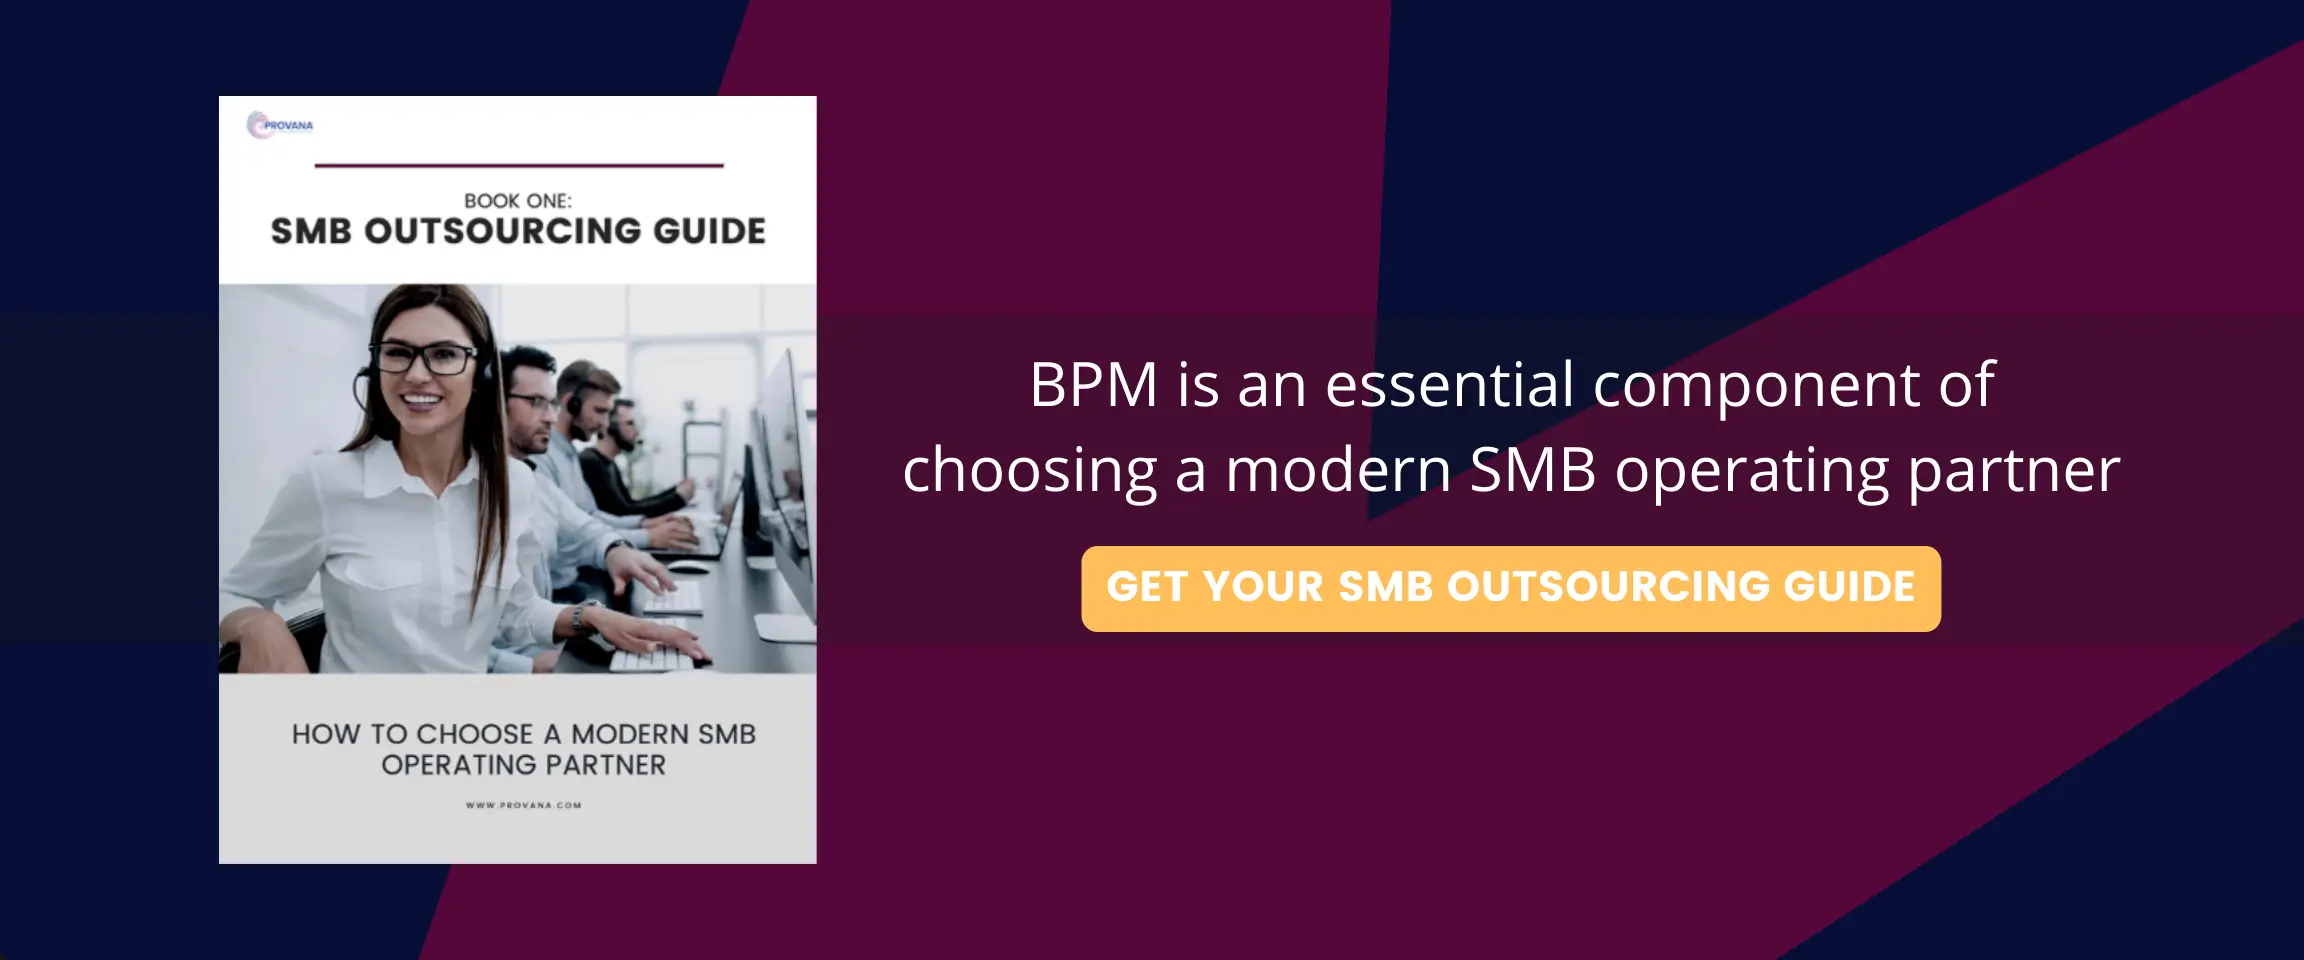 BPM Outsourcing Guide CTA